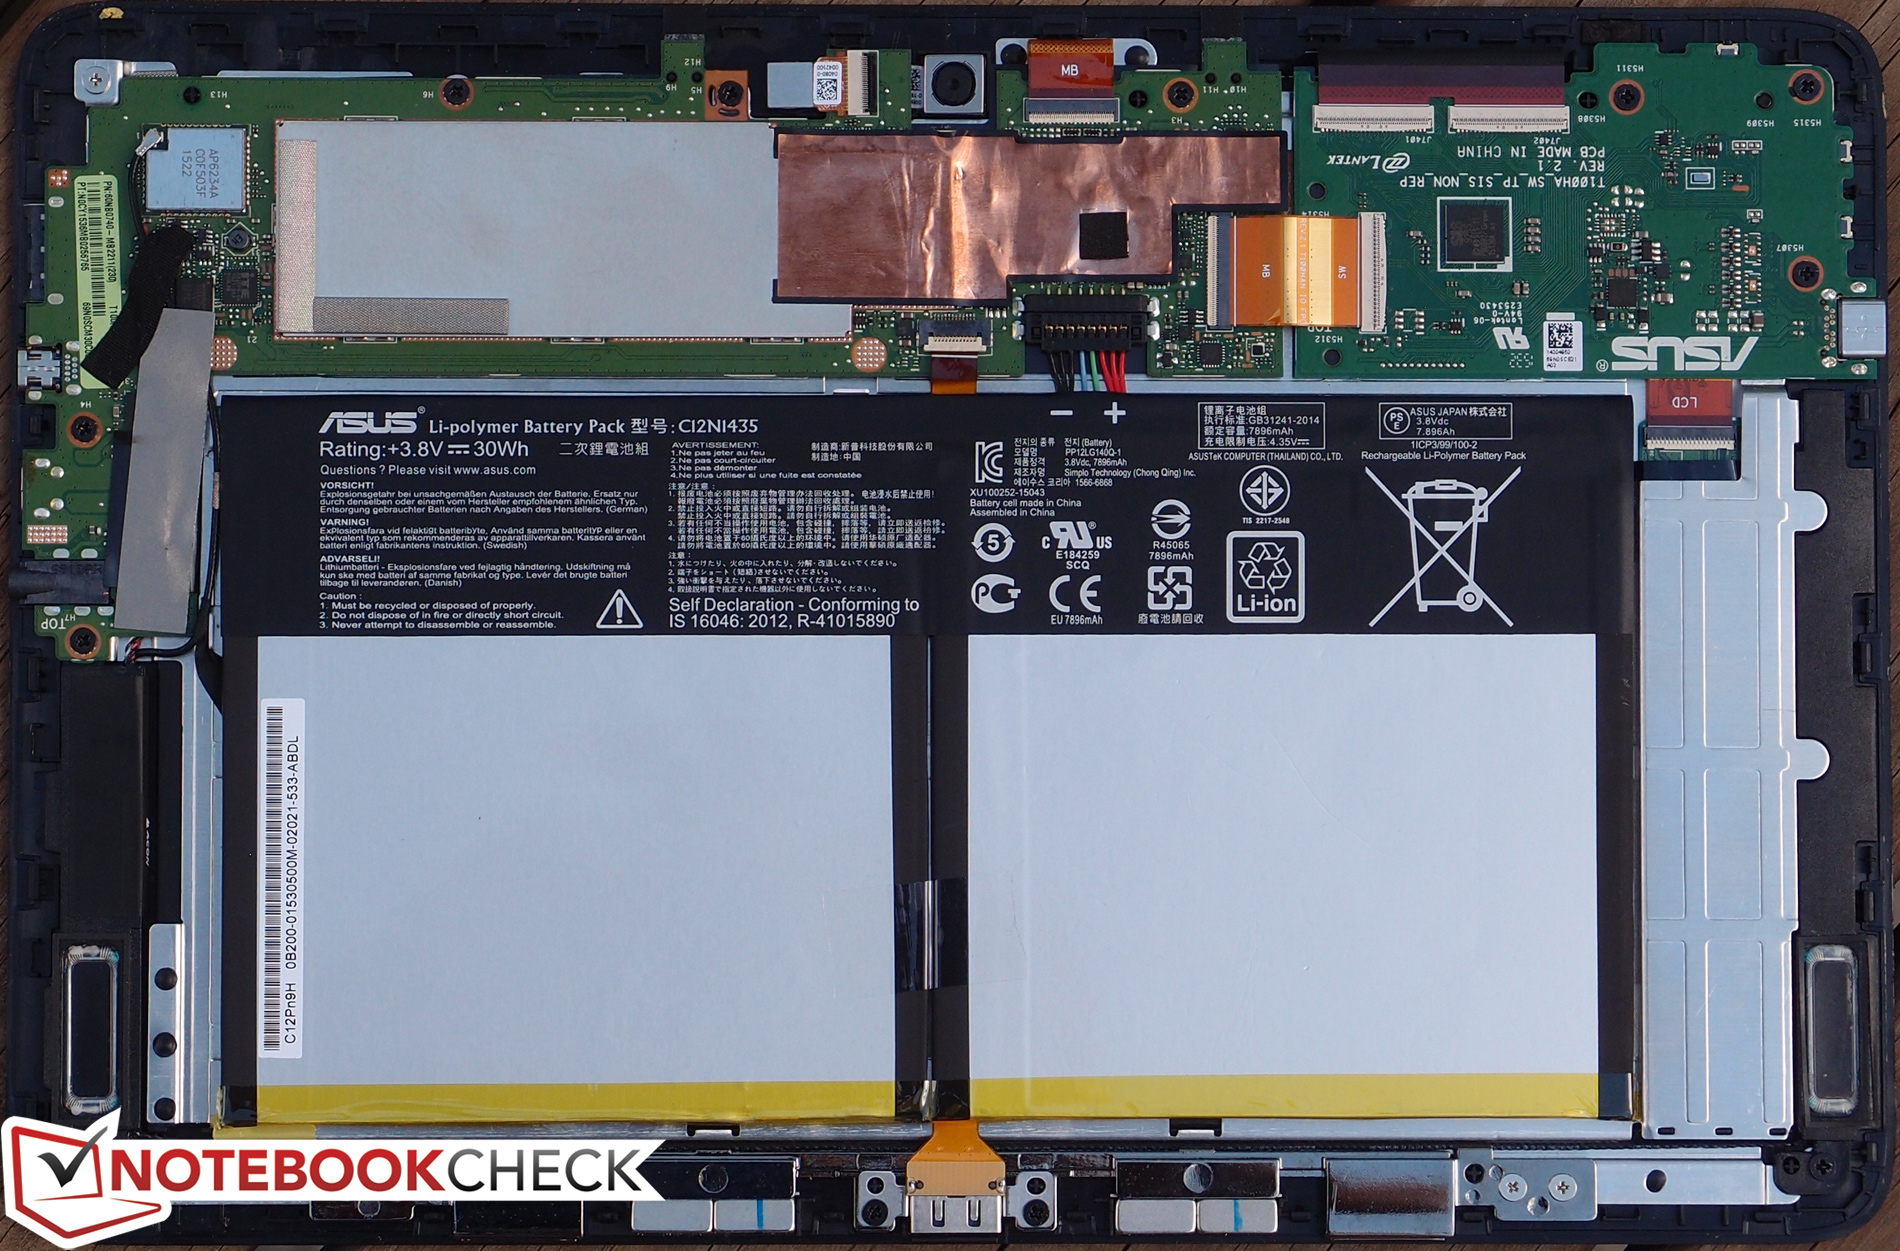 Ноутбук-Планшет Asus Transformer Book T100ta-Dk003h 64gb Dock